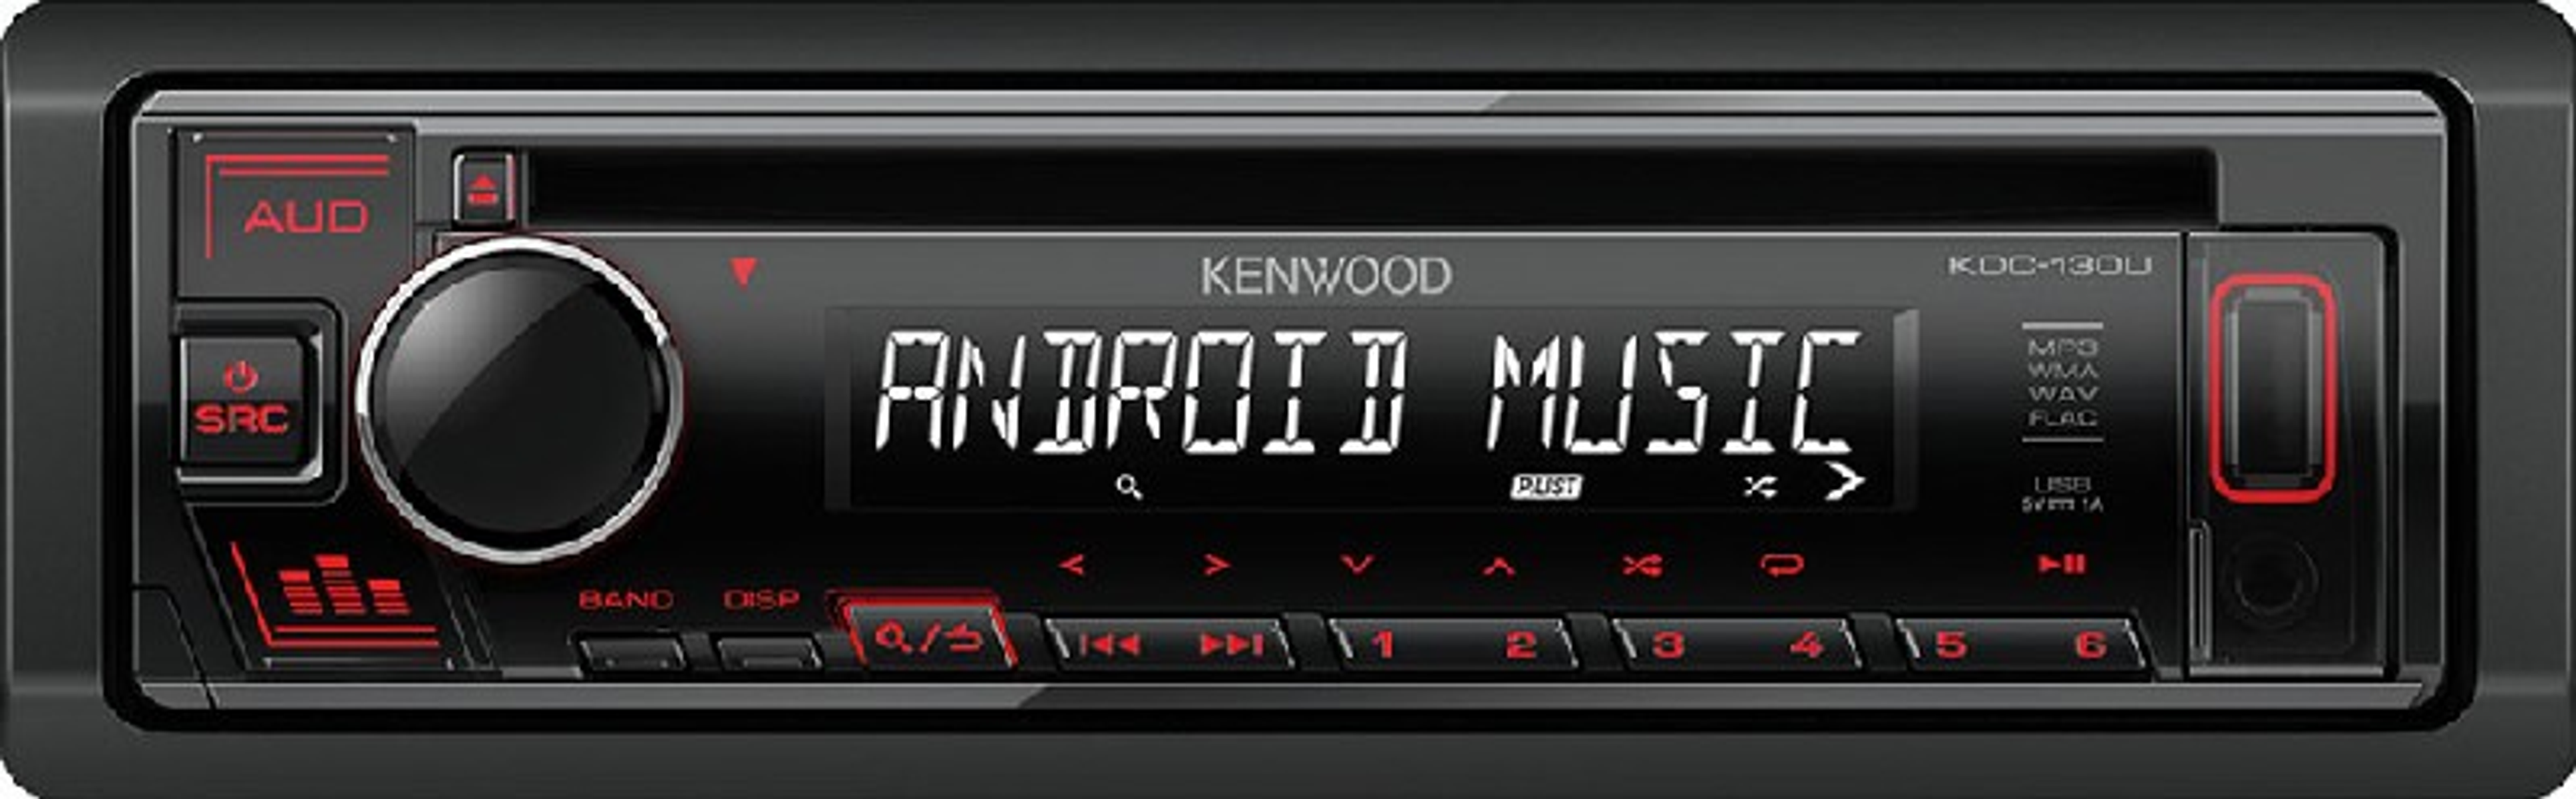 KENWOOD KDC 130 1 UR Autoradio Watt 50 DIN